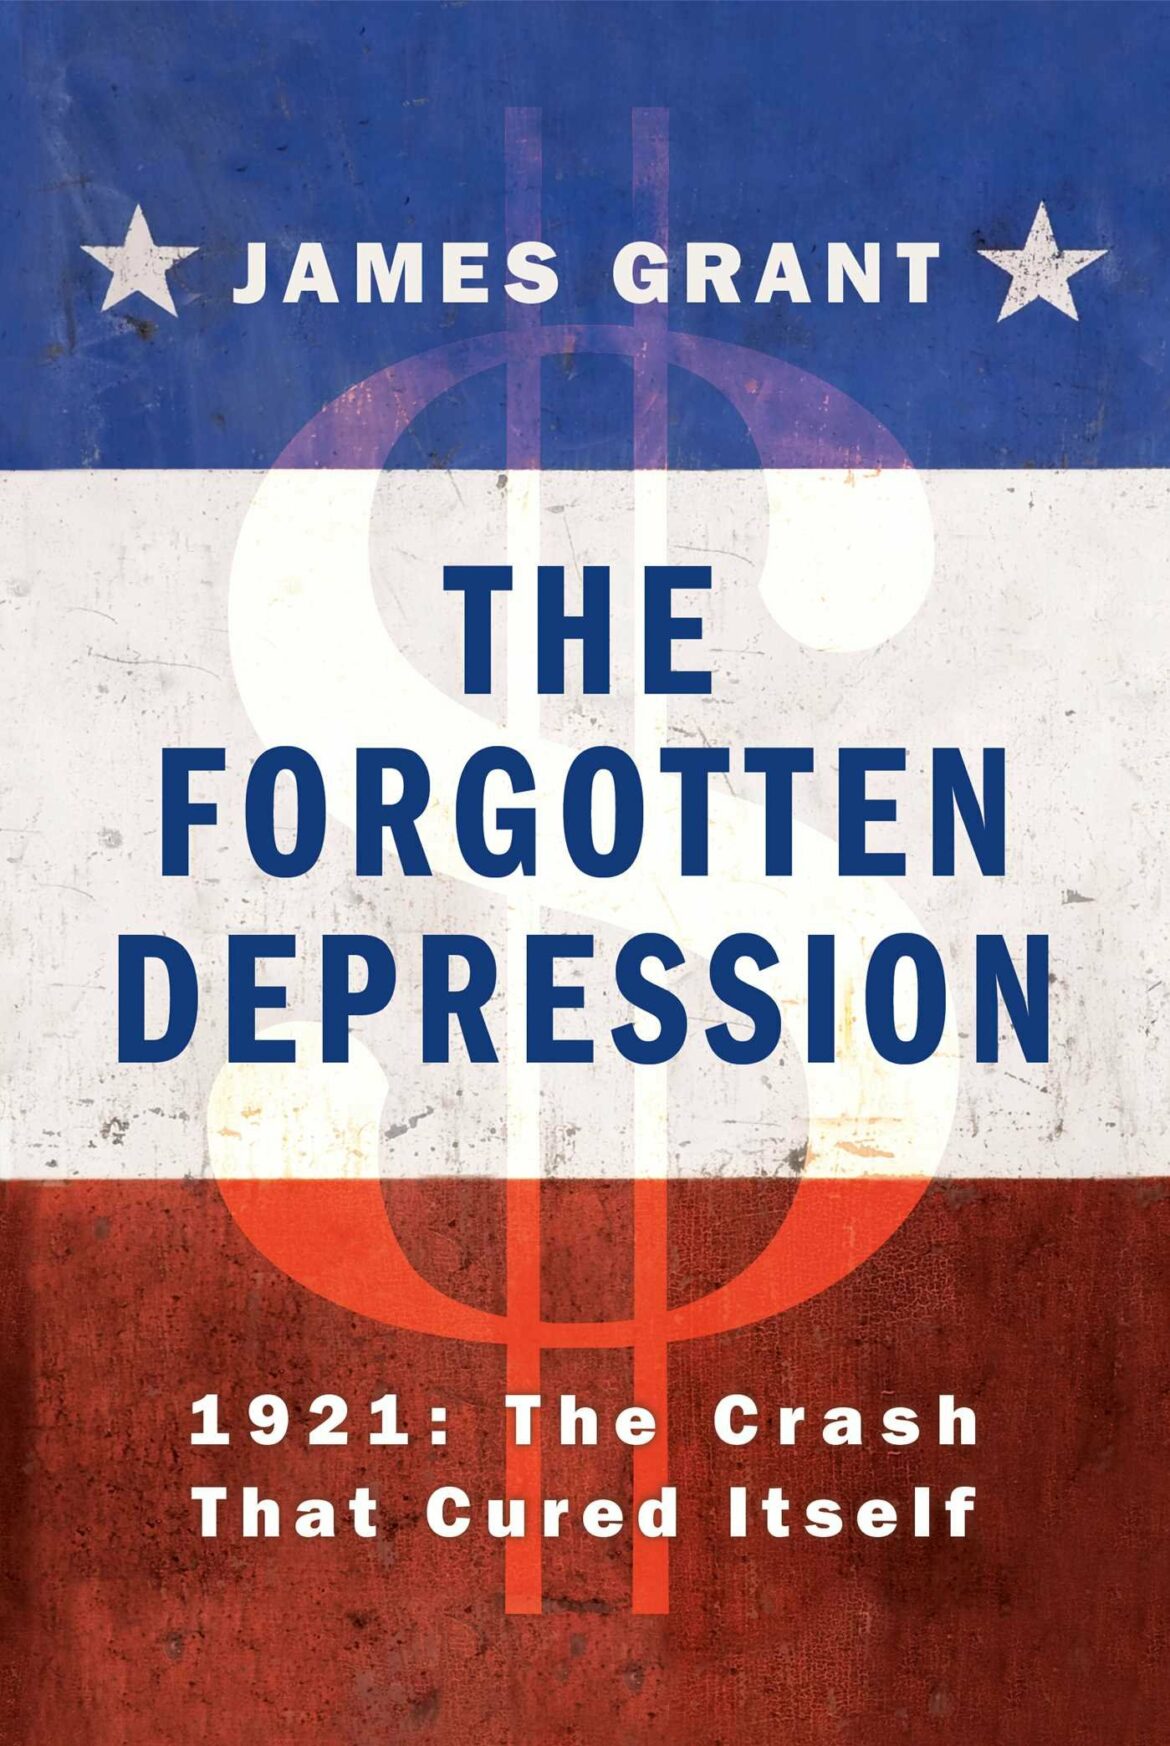 Depression of 1921